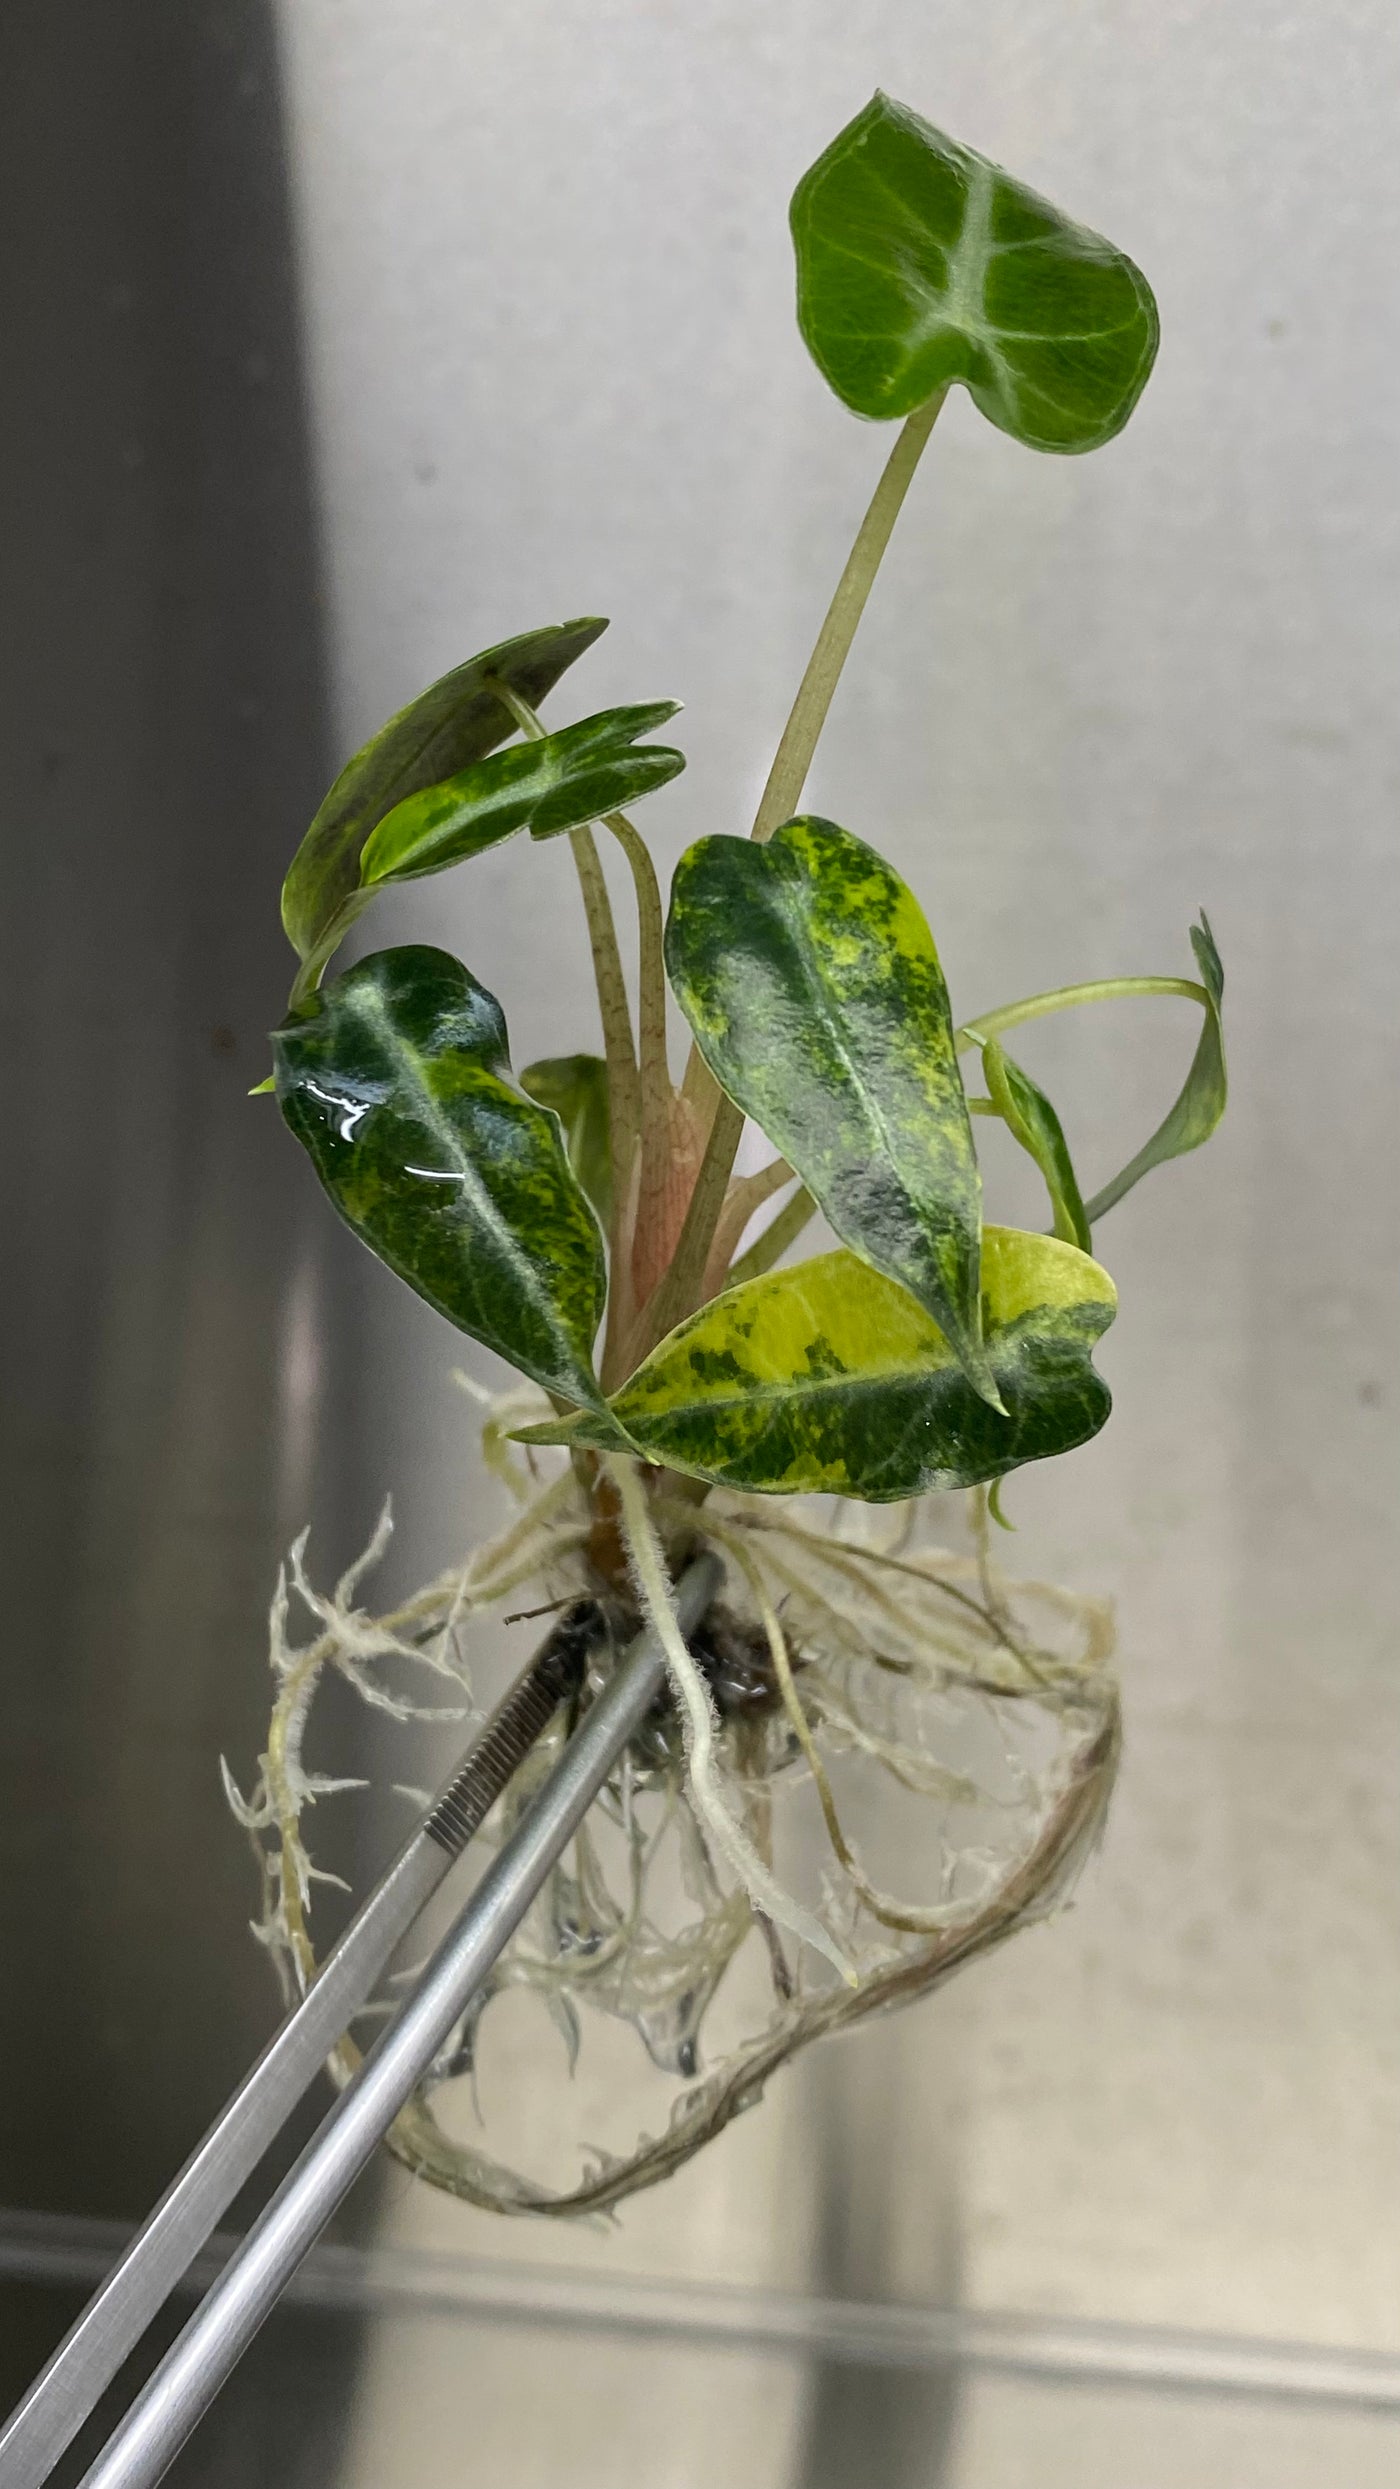 Alocasia Bambino Aurea Plantlets (1)